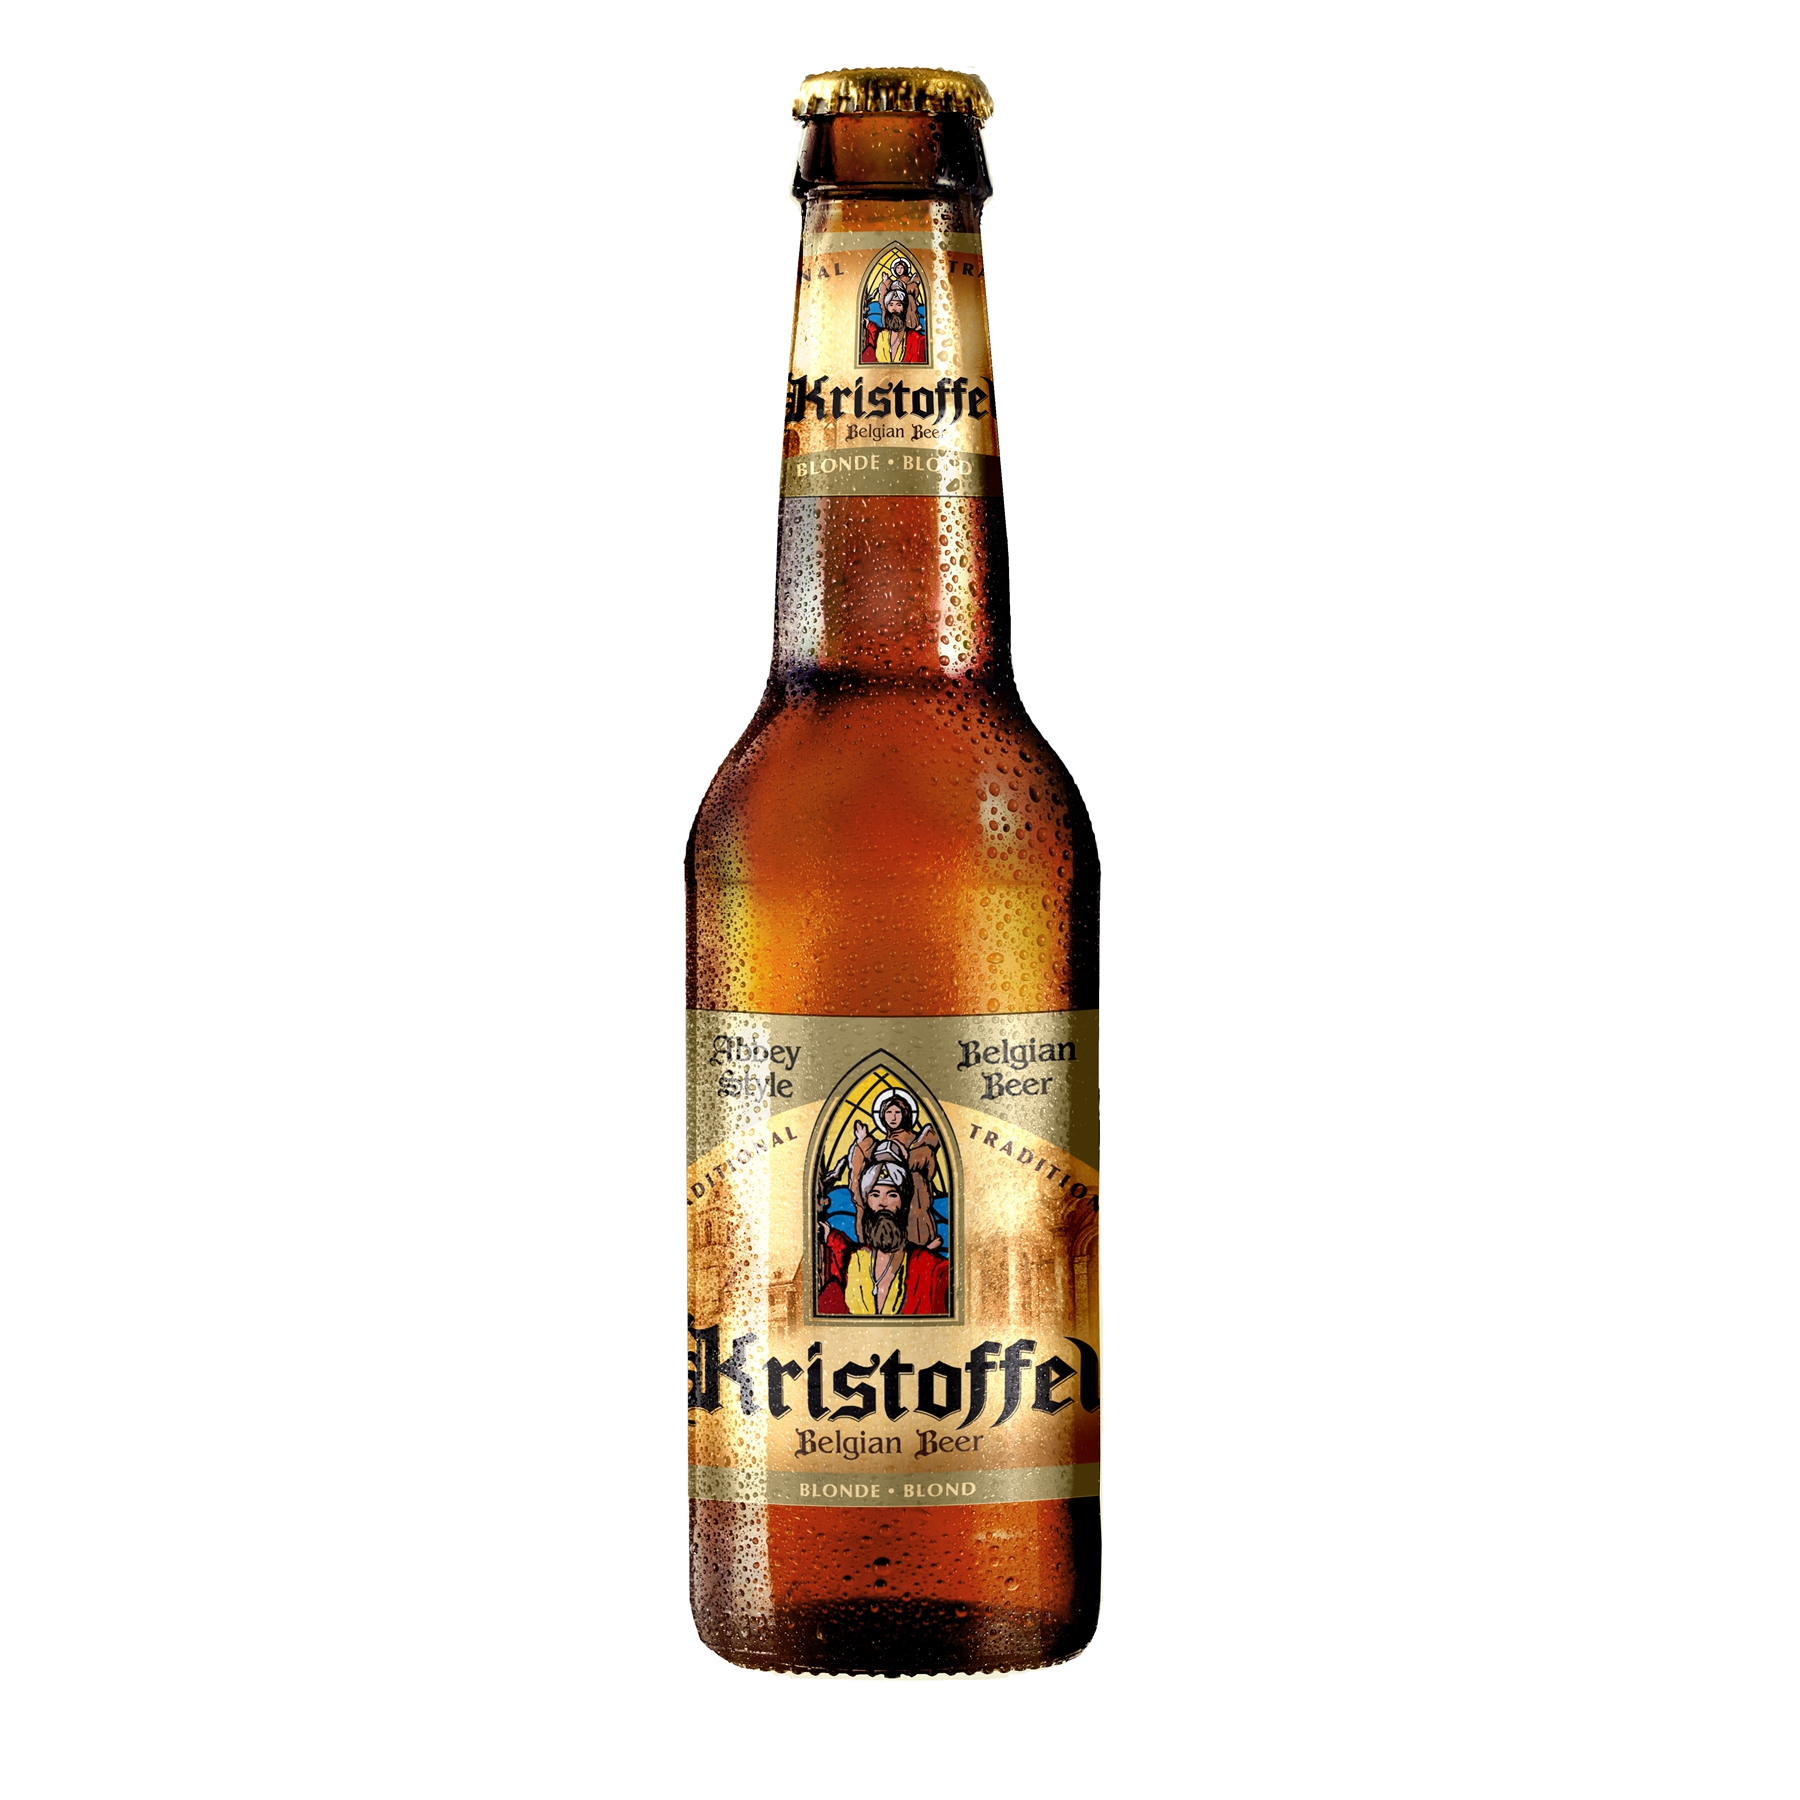 Kristoffel abbey style blond beer